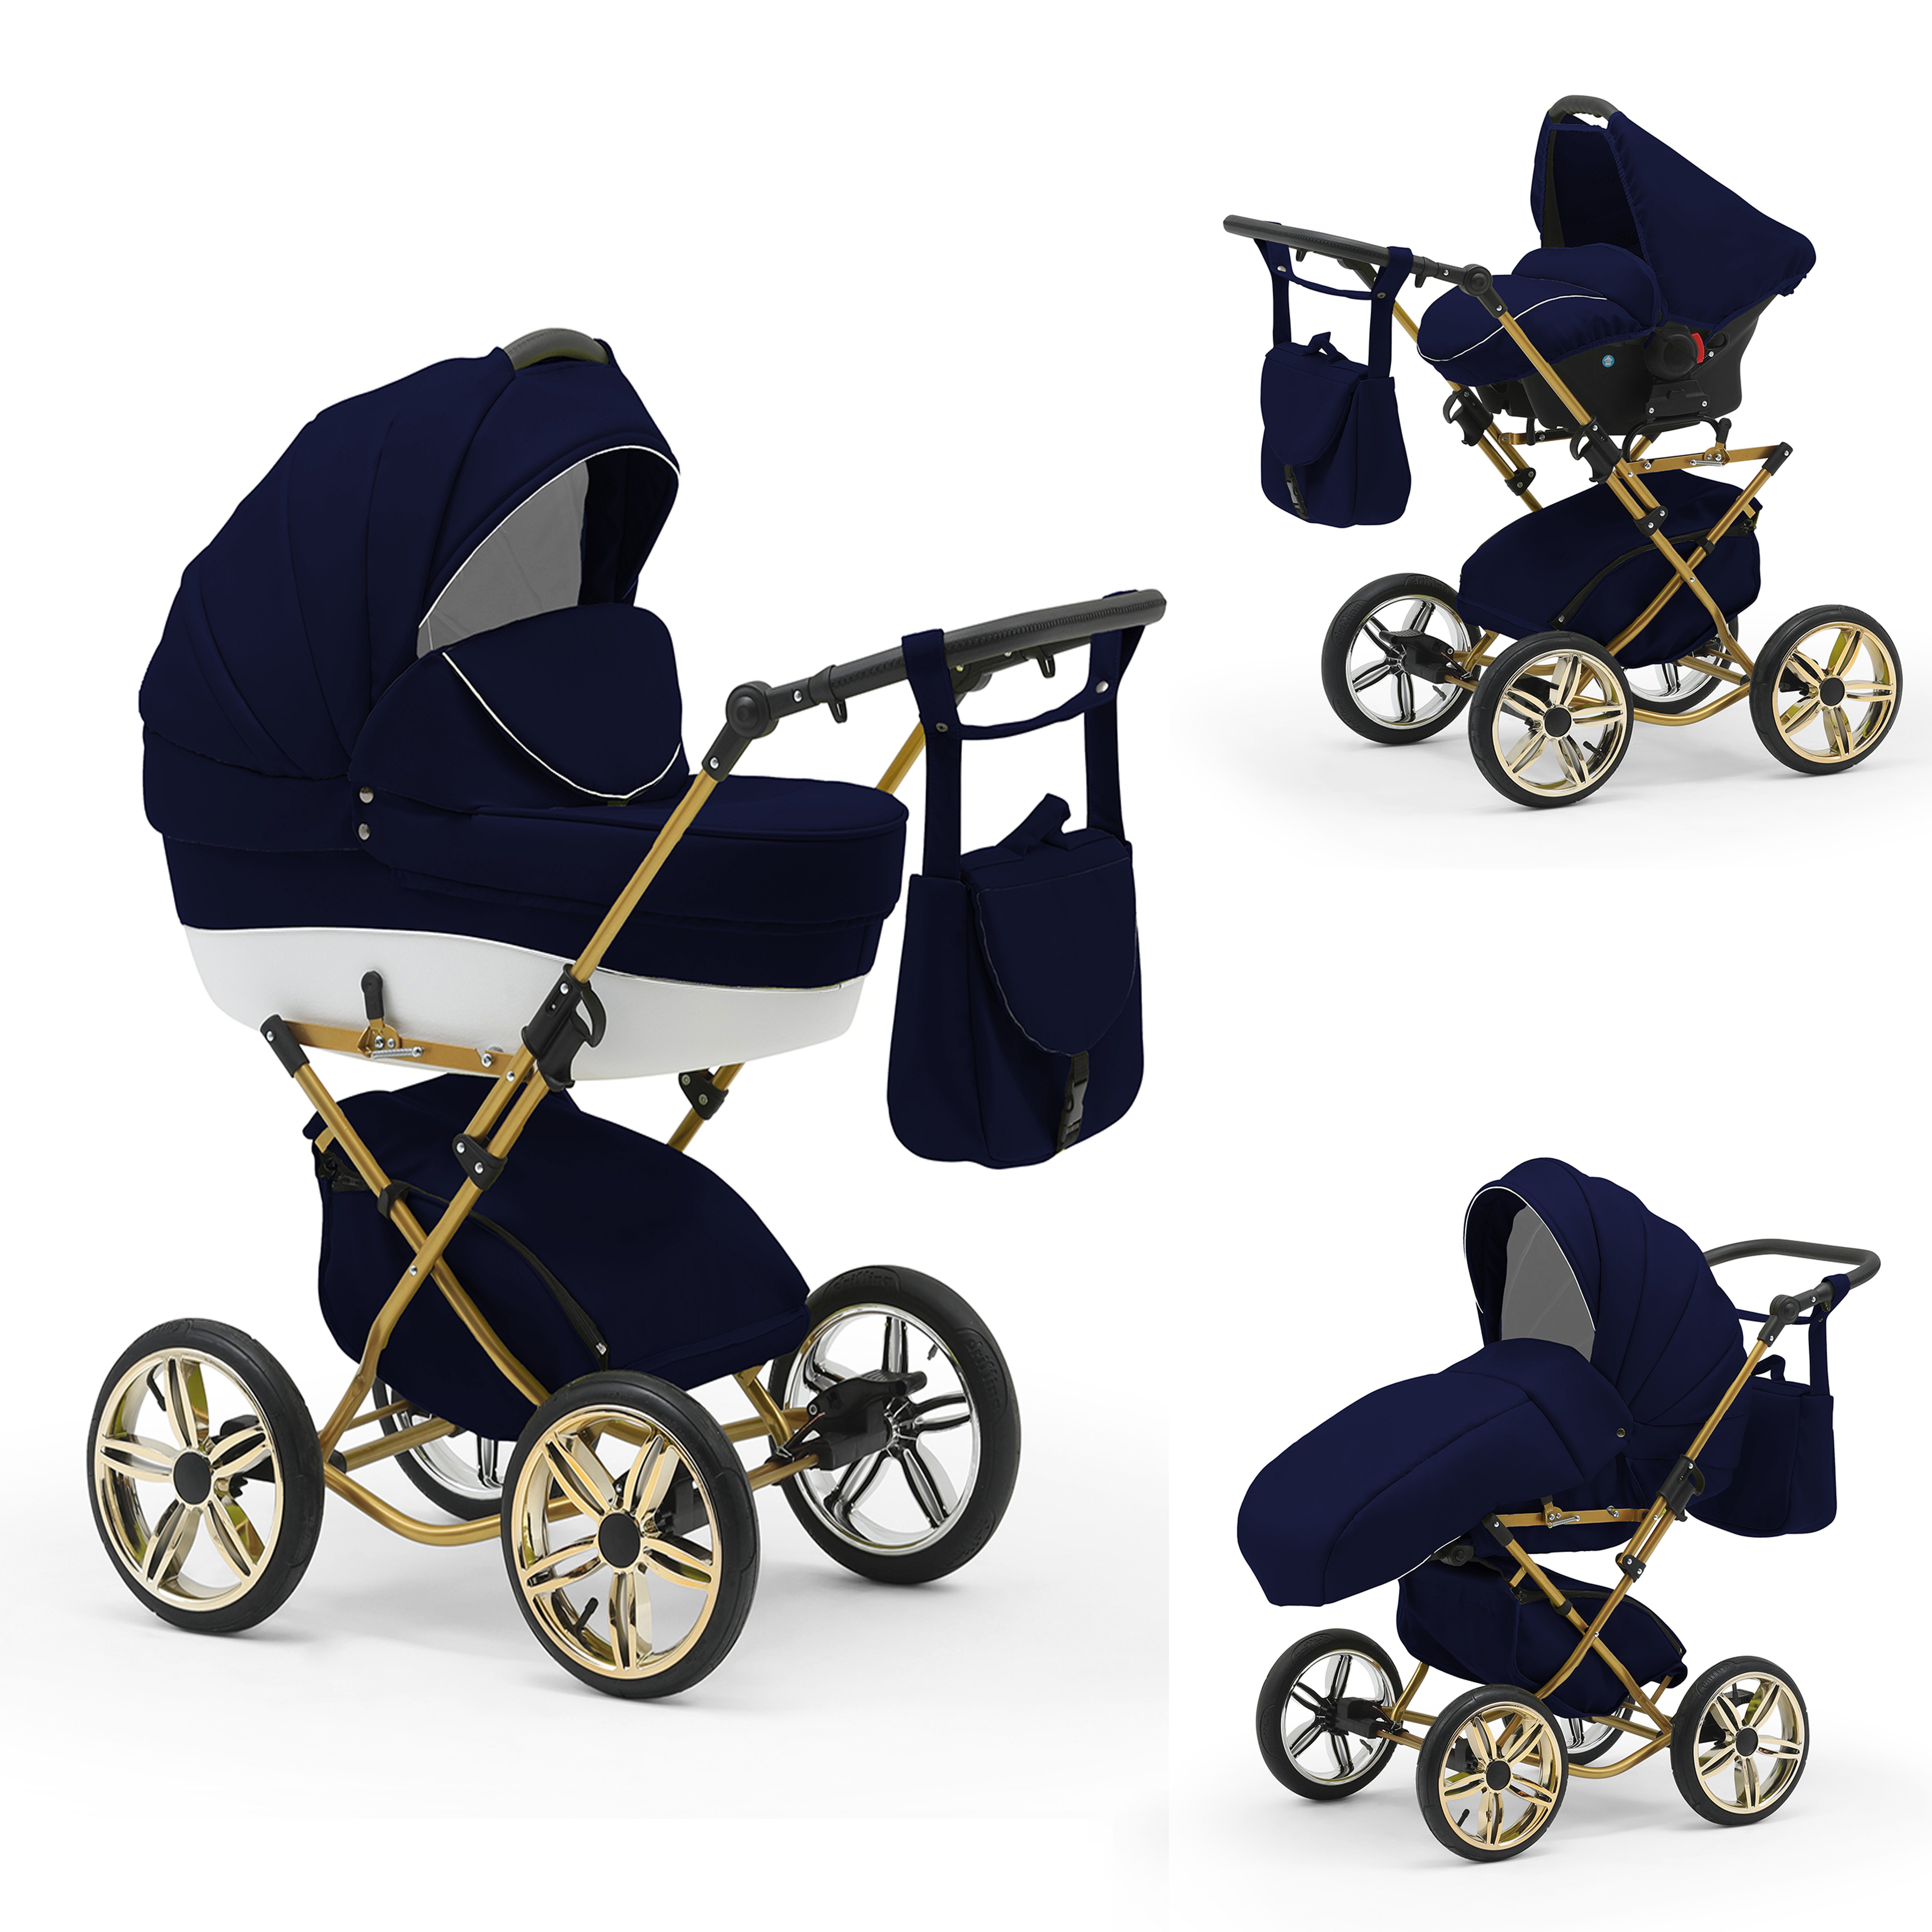 babies-on-wheels Kombi-Kinderwagen Sorento 3 in 1 inkl. Autositz - 13 Teile - in 10 Designs Navy-Weiß